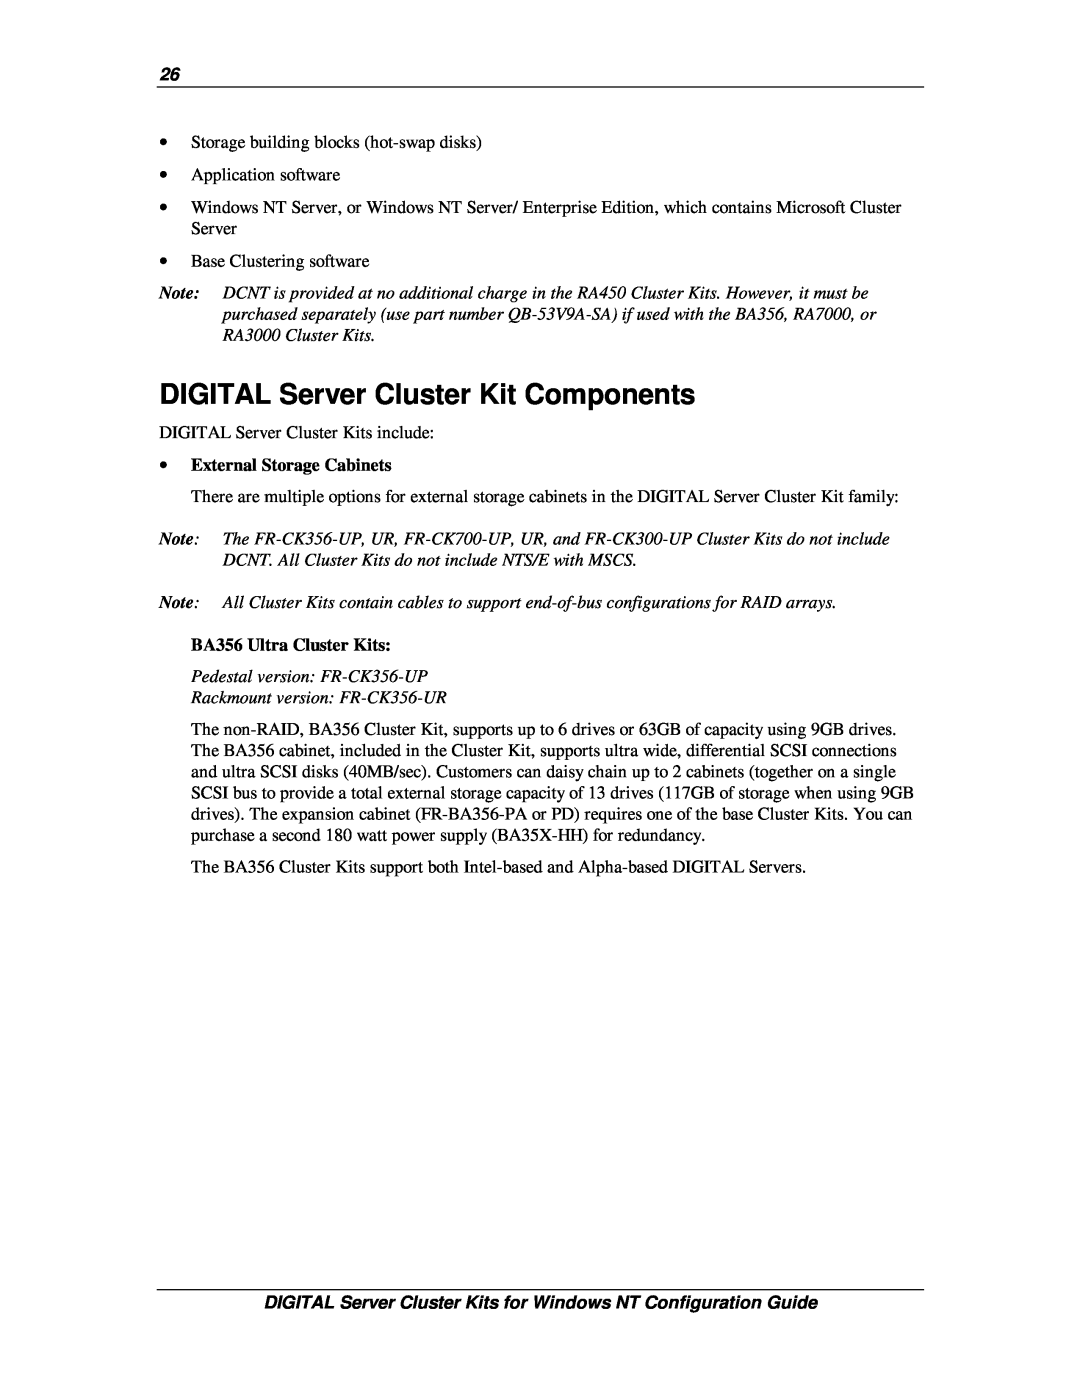 Compaq DIGITAL Server Cluster Kits for Windows NT manual DIGITAL Server Cluster Kit Components, ∙ External Storage Cabinets 